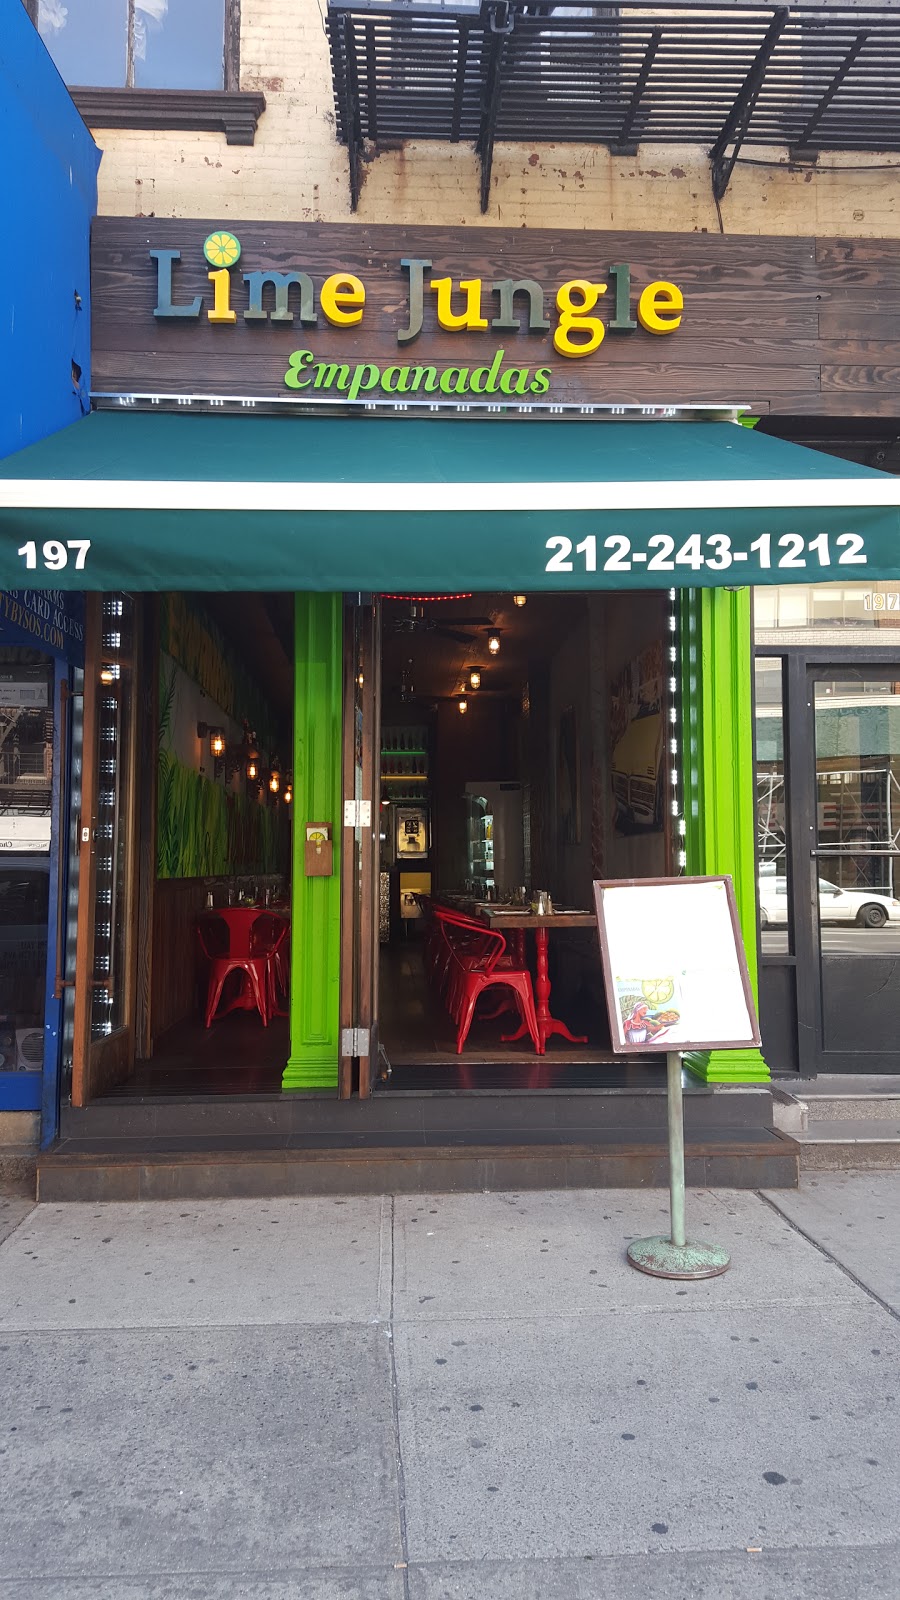 Photo of Limon Jungle Empanadas in New York City, New York, United States - 2 Picture of Restaurant, Food, Point of interest, Establishment